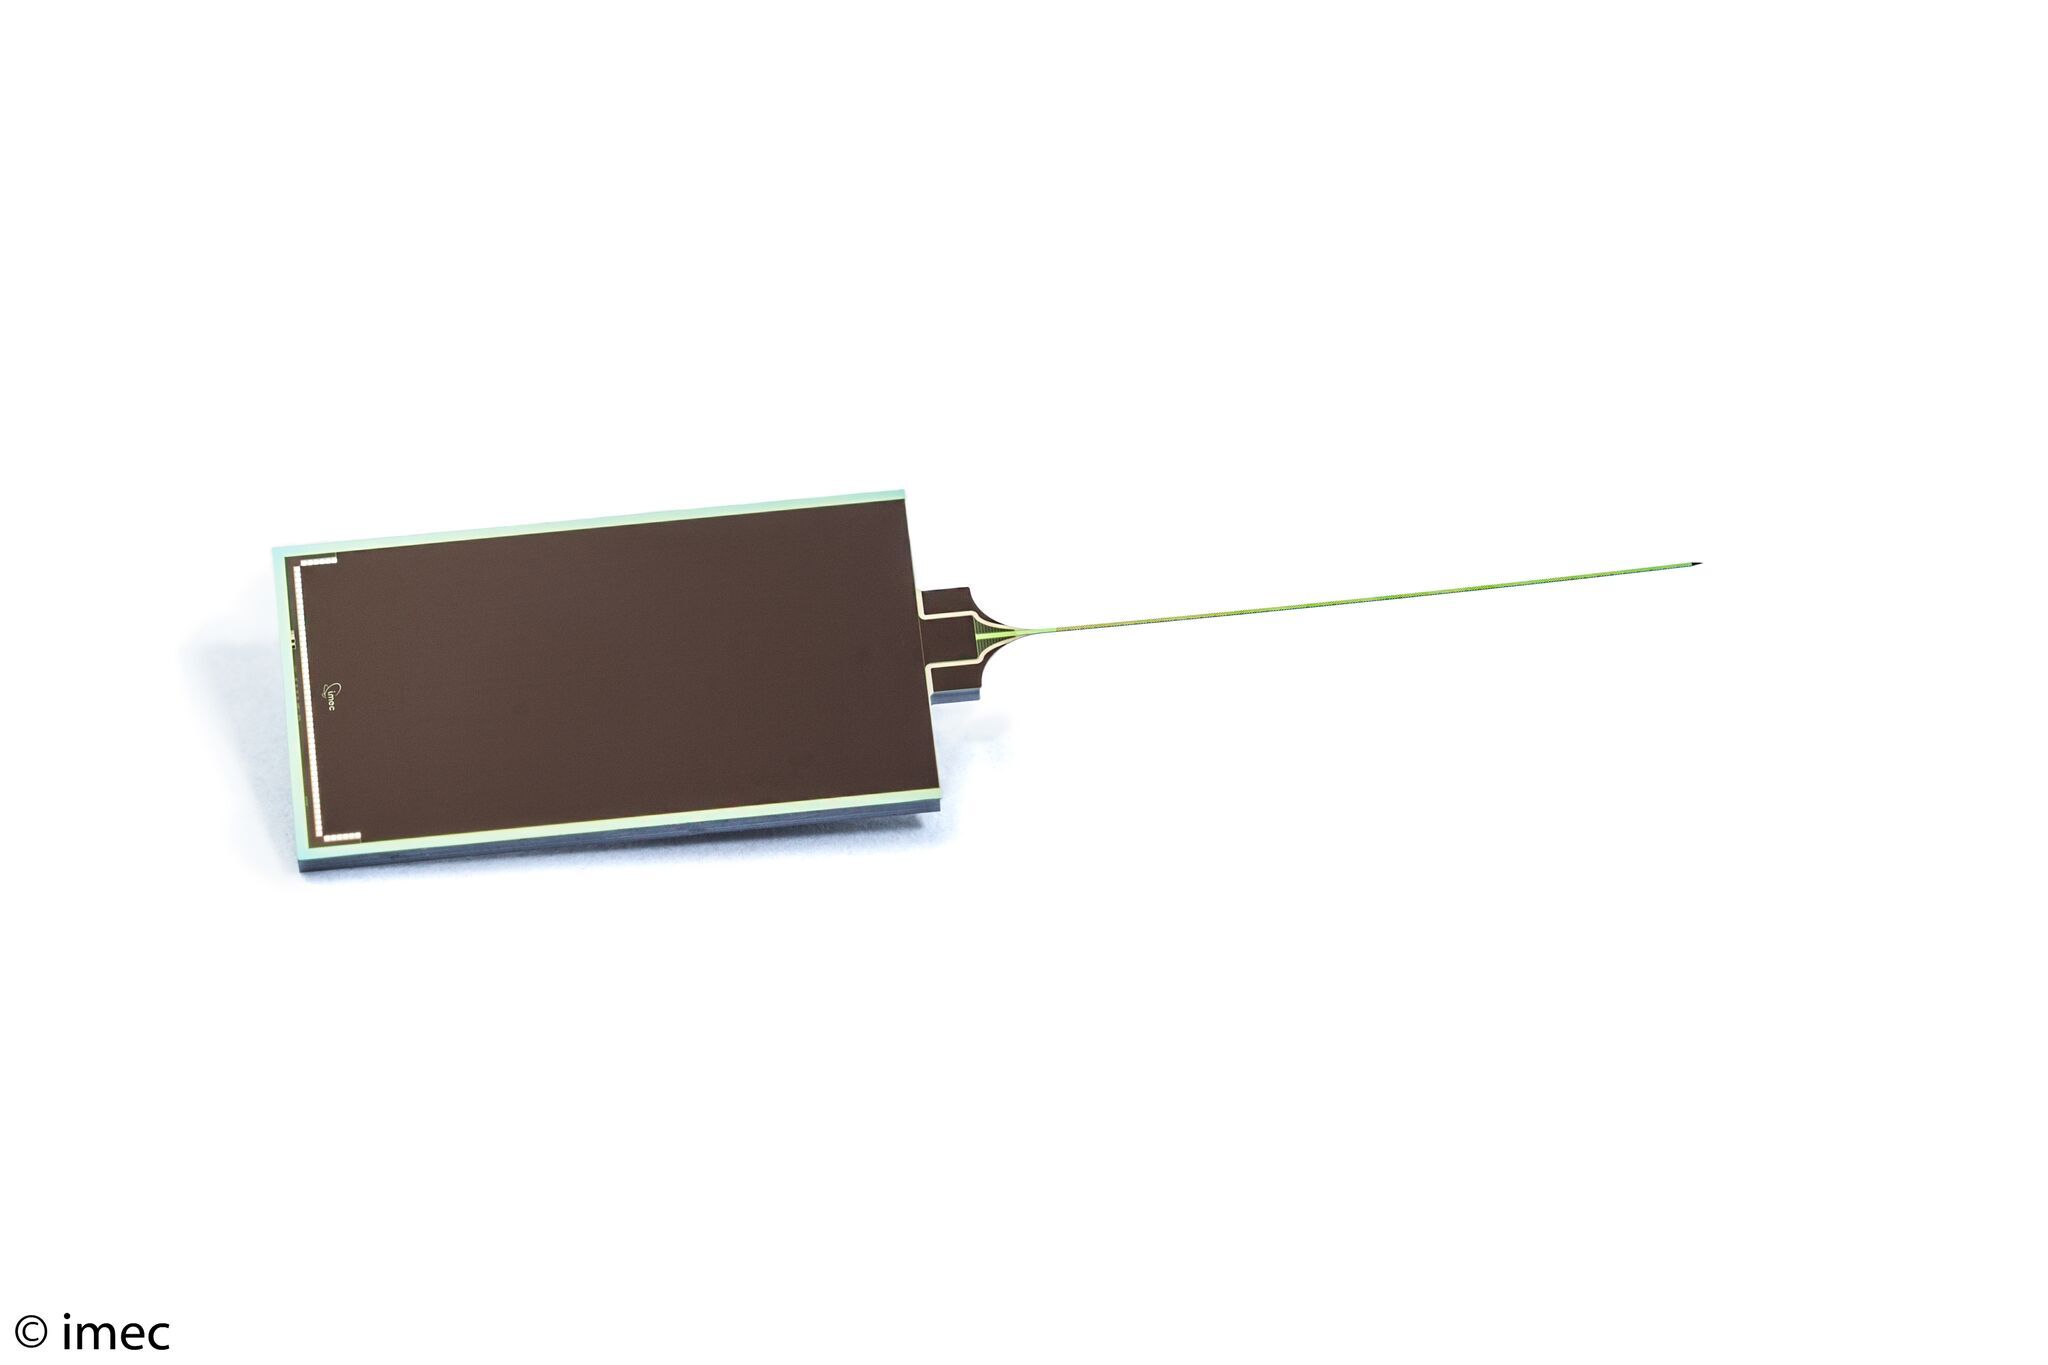 Image of a Neuropixels probe